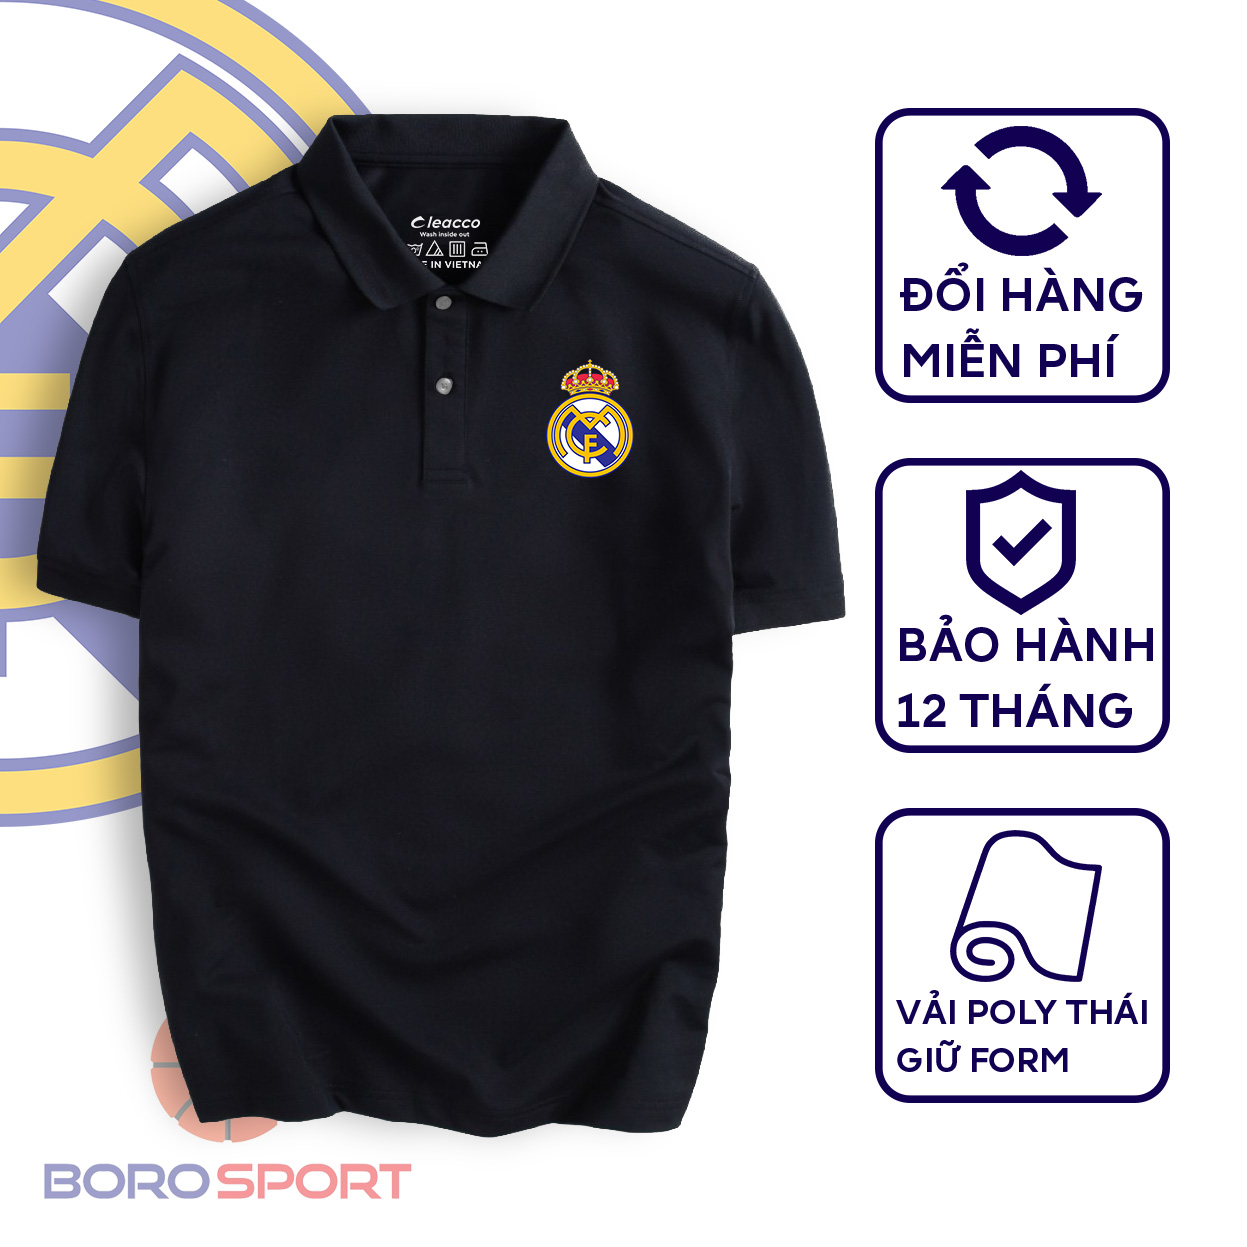 Áo Polo Nam Siêu Ưu Đãi Áo Thun Polo Cổ Bẻ Chất Liệu Vải Poly Thái Giữ Form Dáng Cleacco Real Madrid Boro Sport